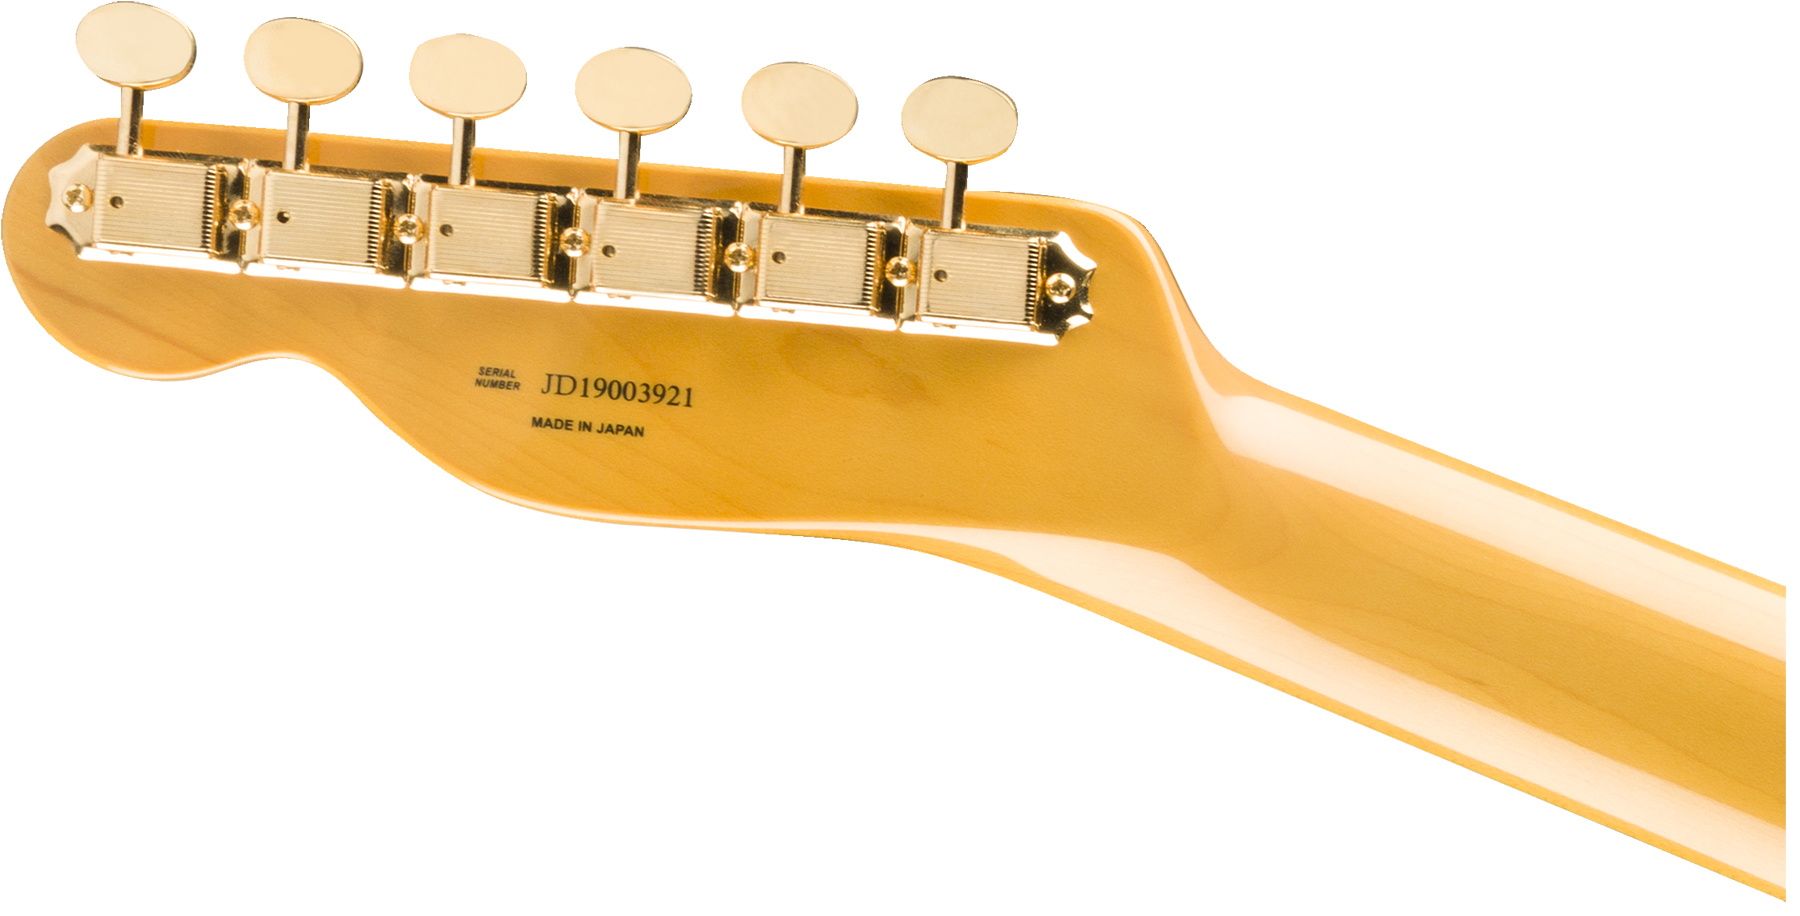 Fender Tele Daybreak Ltd 2019 Japon Gh Rw - Olympic White - Tel shape electric guitar - Variation 3